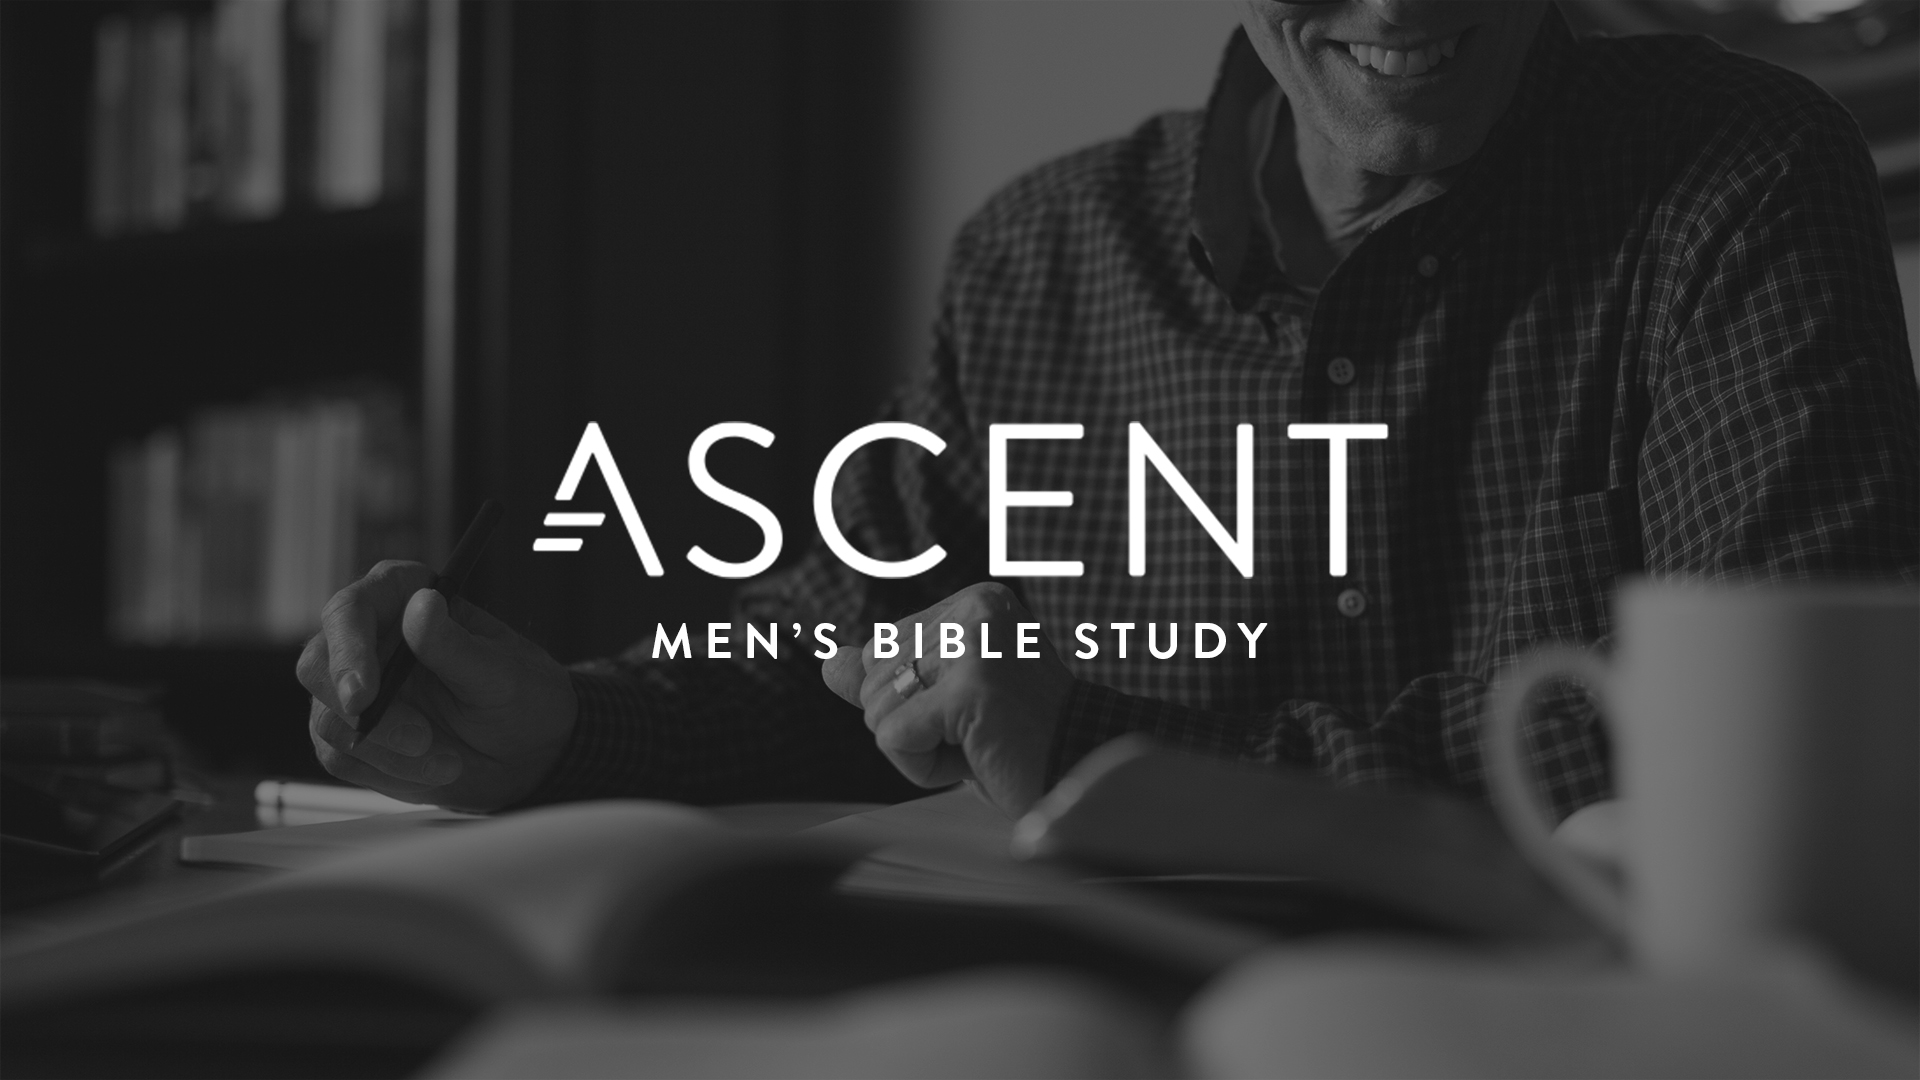 Ascent men's Bible study